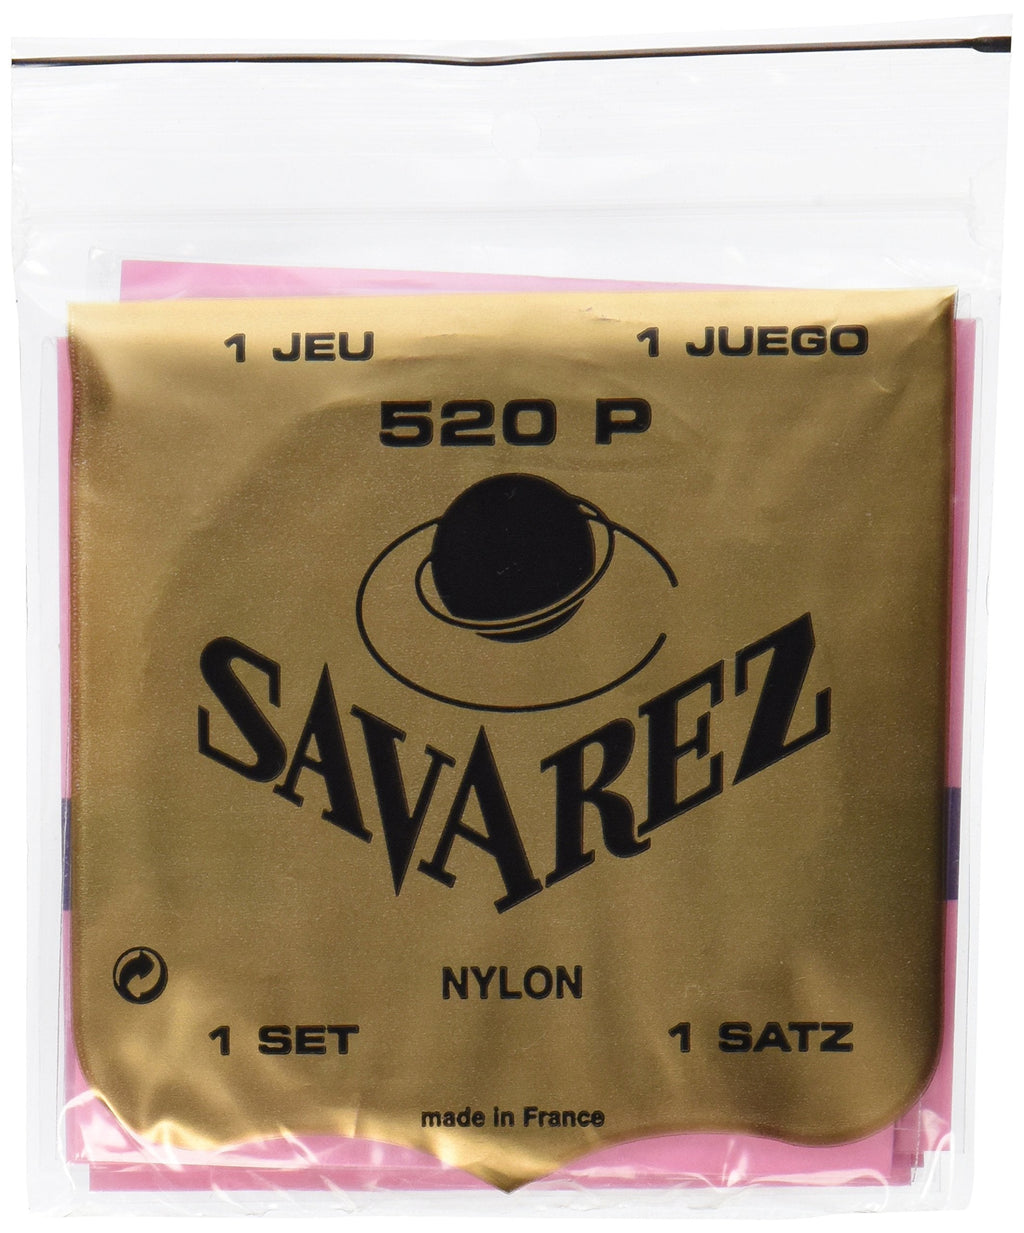 Savarez Classical Guitar Strings (520P)